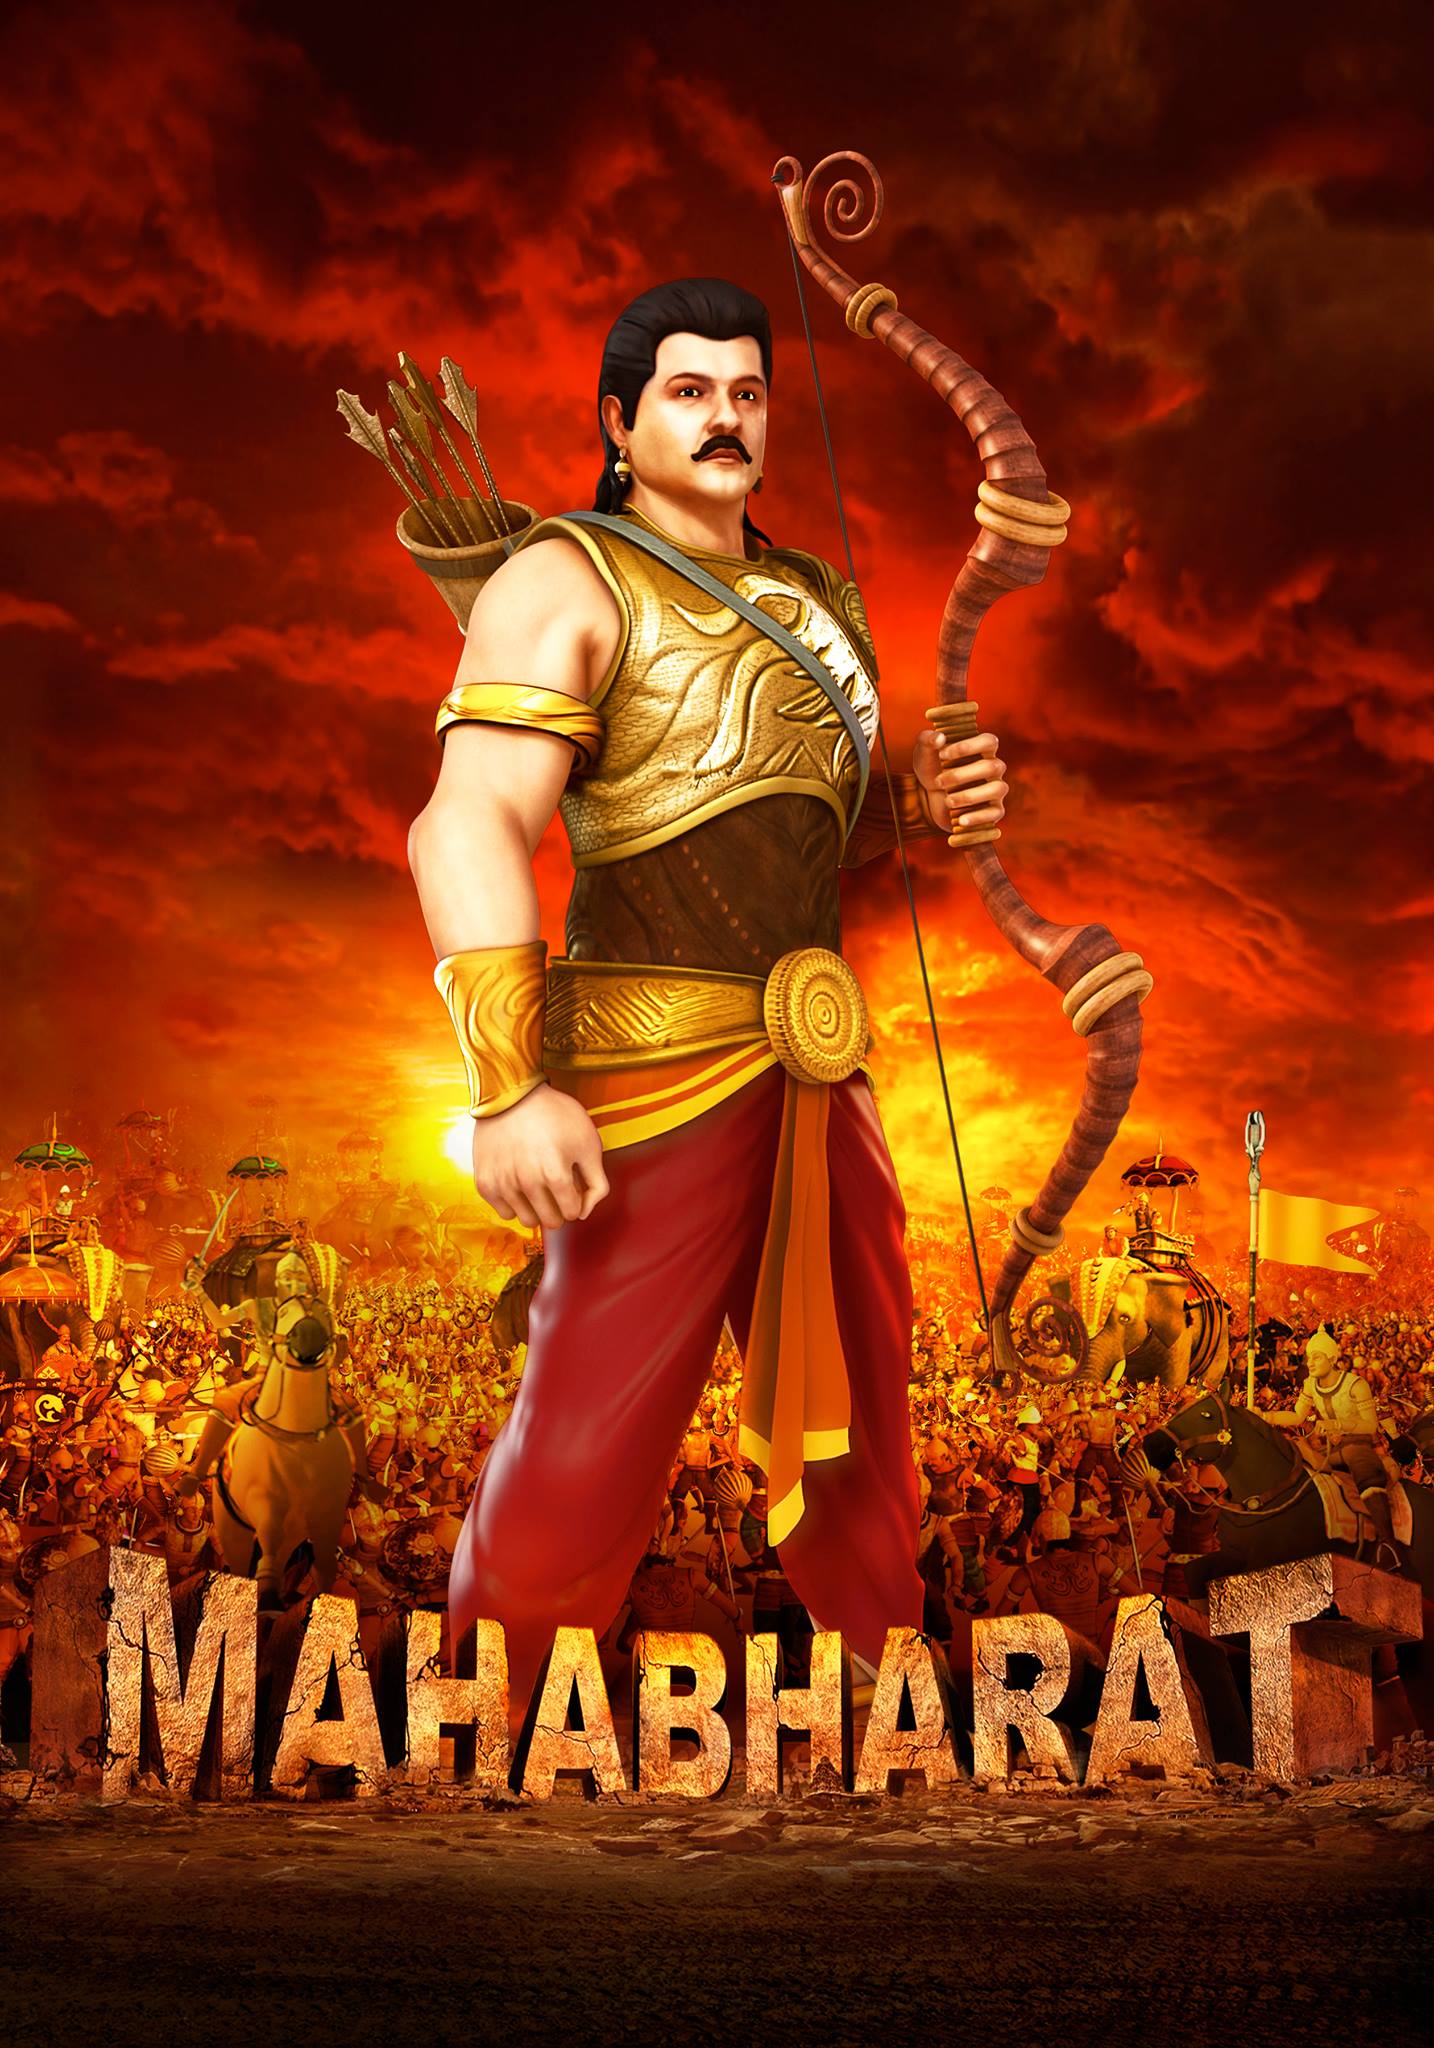 mahabharat star plus 2013 episode download